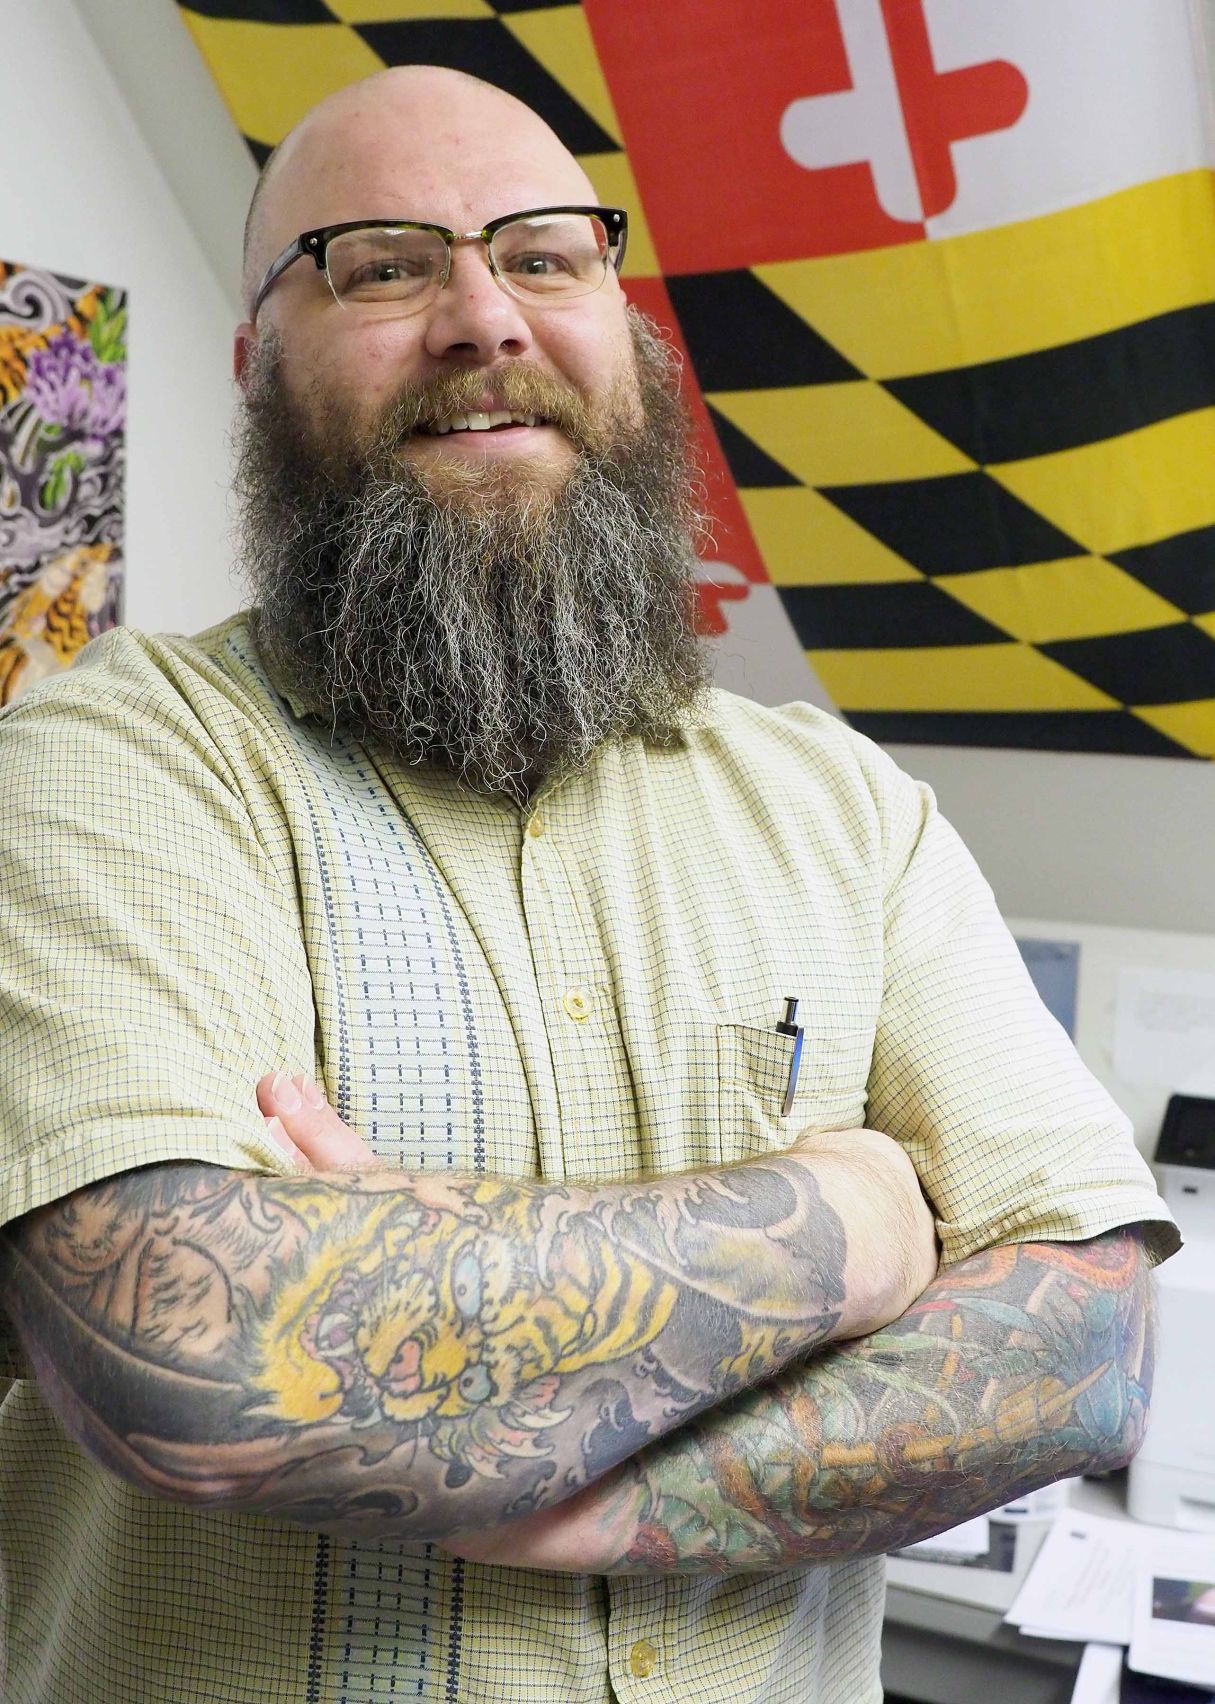 keepon tattoo by professor-sideburn on DeviantArt